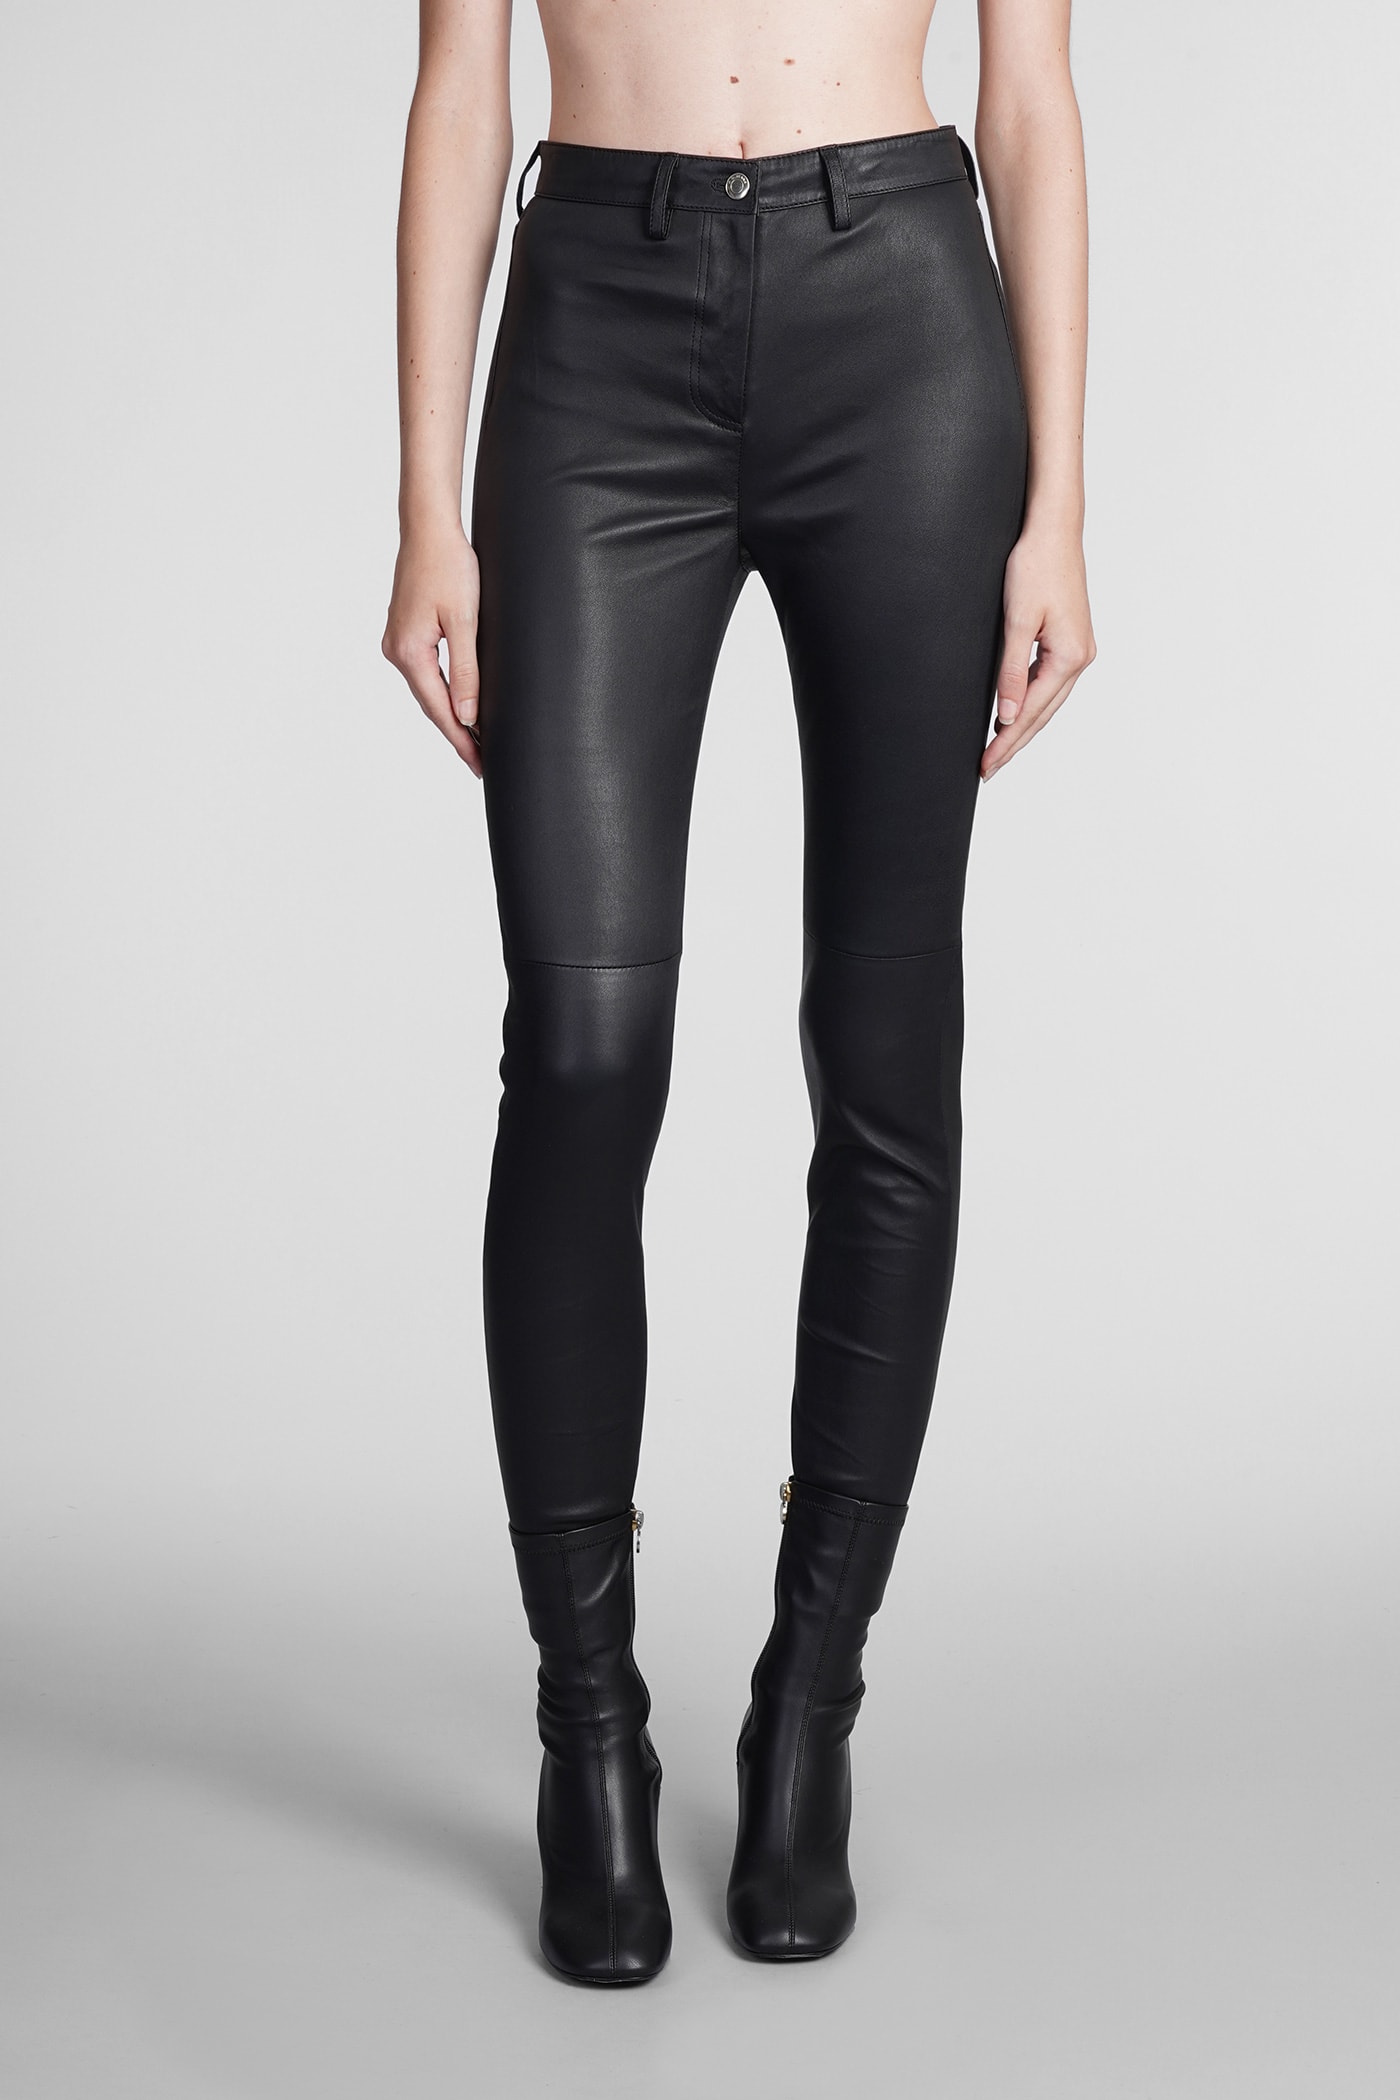 IRO Aroya Pants In Black Leather